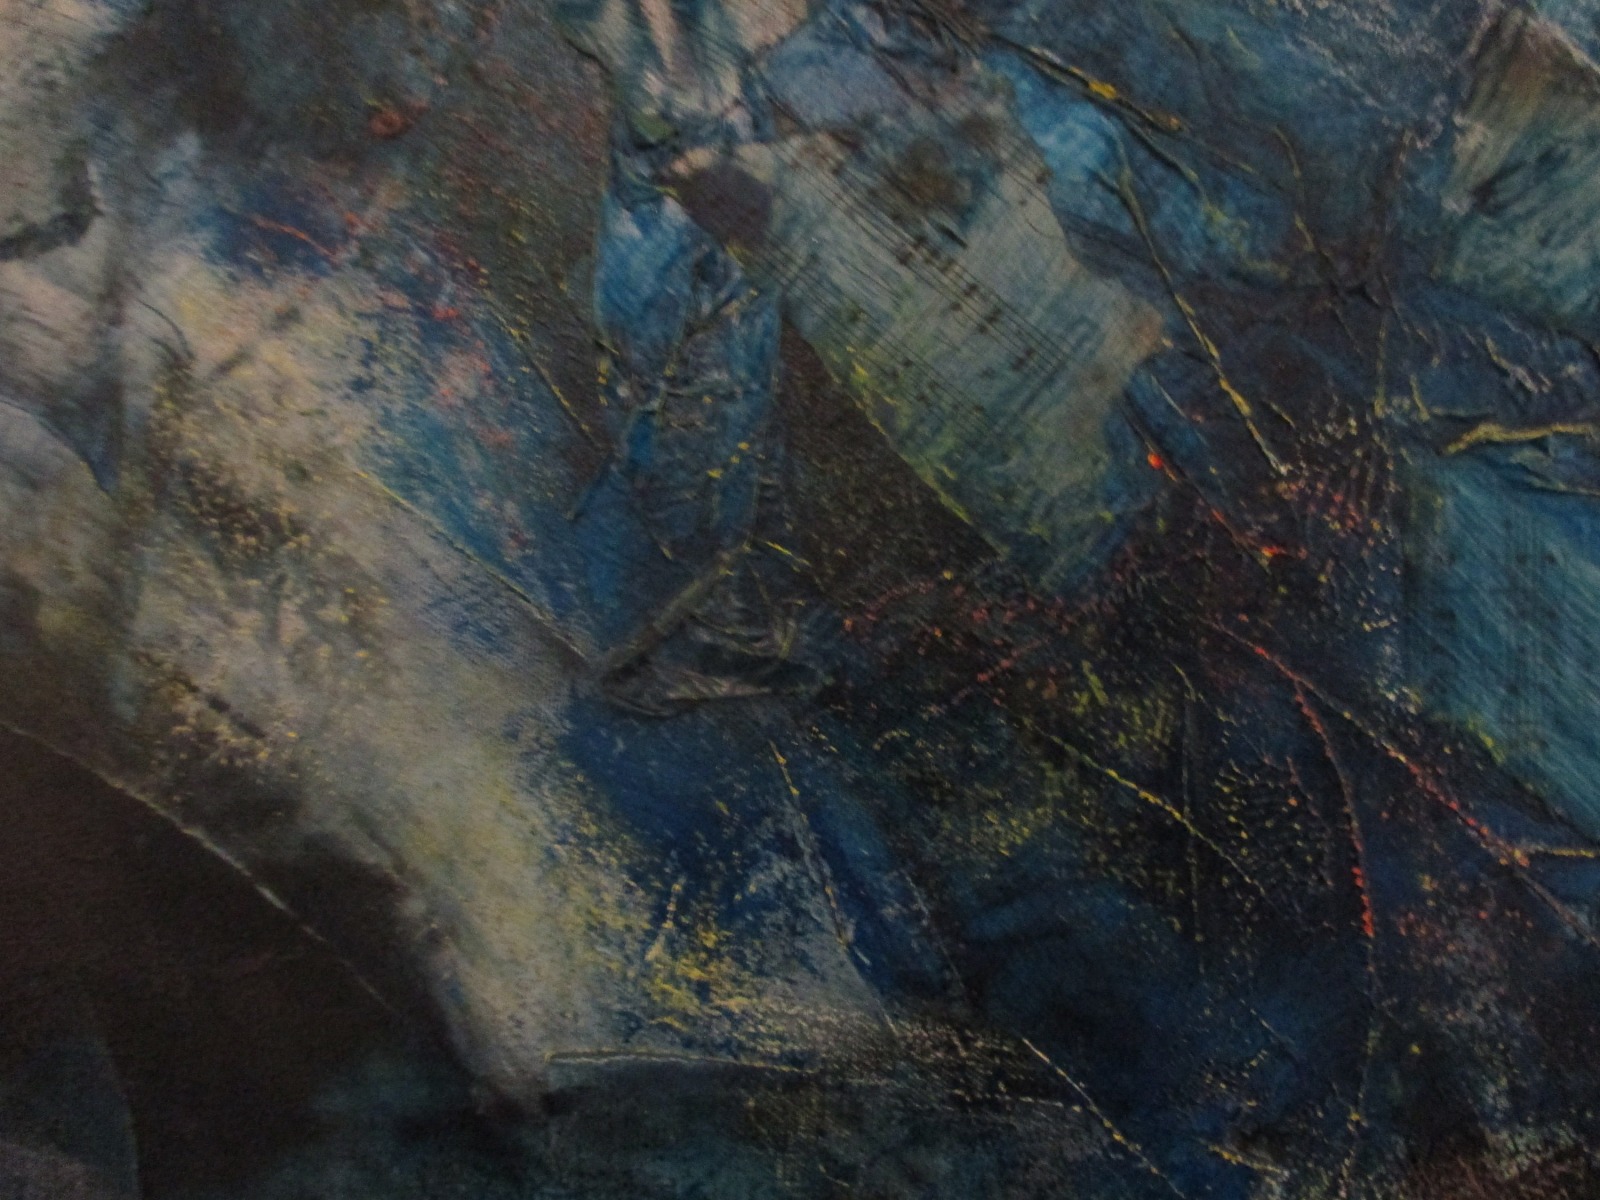 abstraktes blaues Ölbild - Materialcollage mixedmedia 100x80cm Originalmalerei Sonja